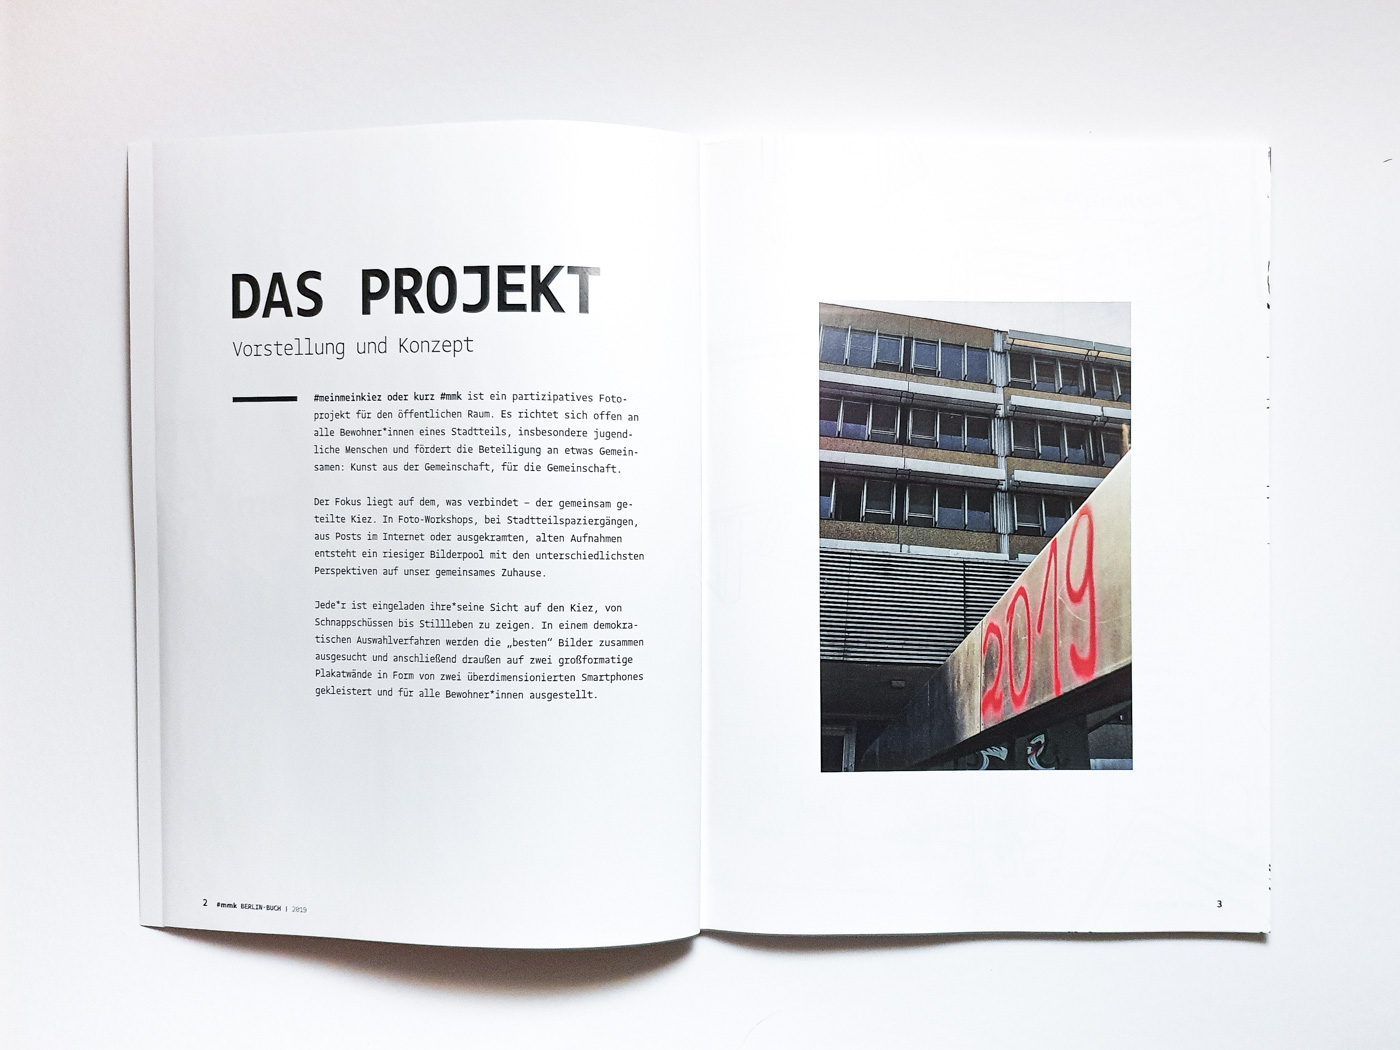 meinmeinkiez Magazin Berlin Buch 2019 | © 2020 Patrick Weseloh | weseloh.media